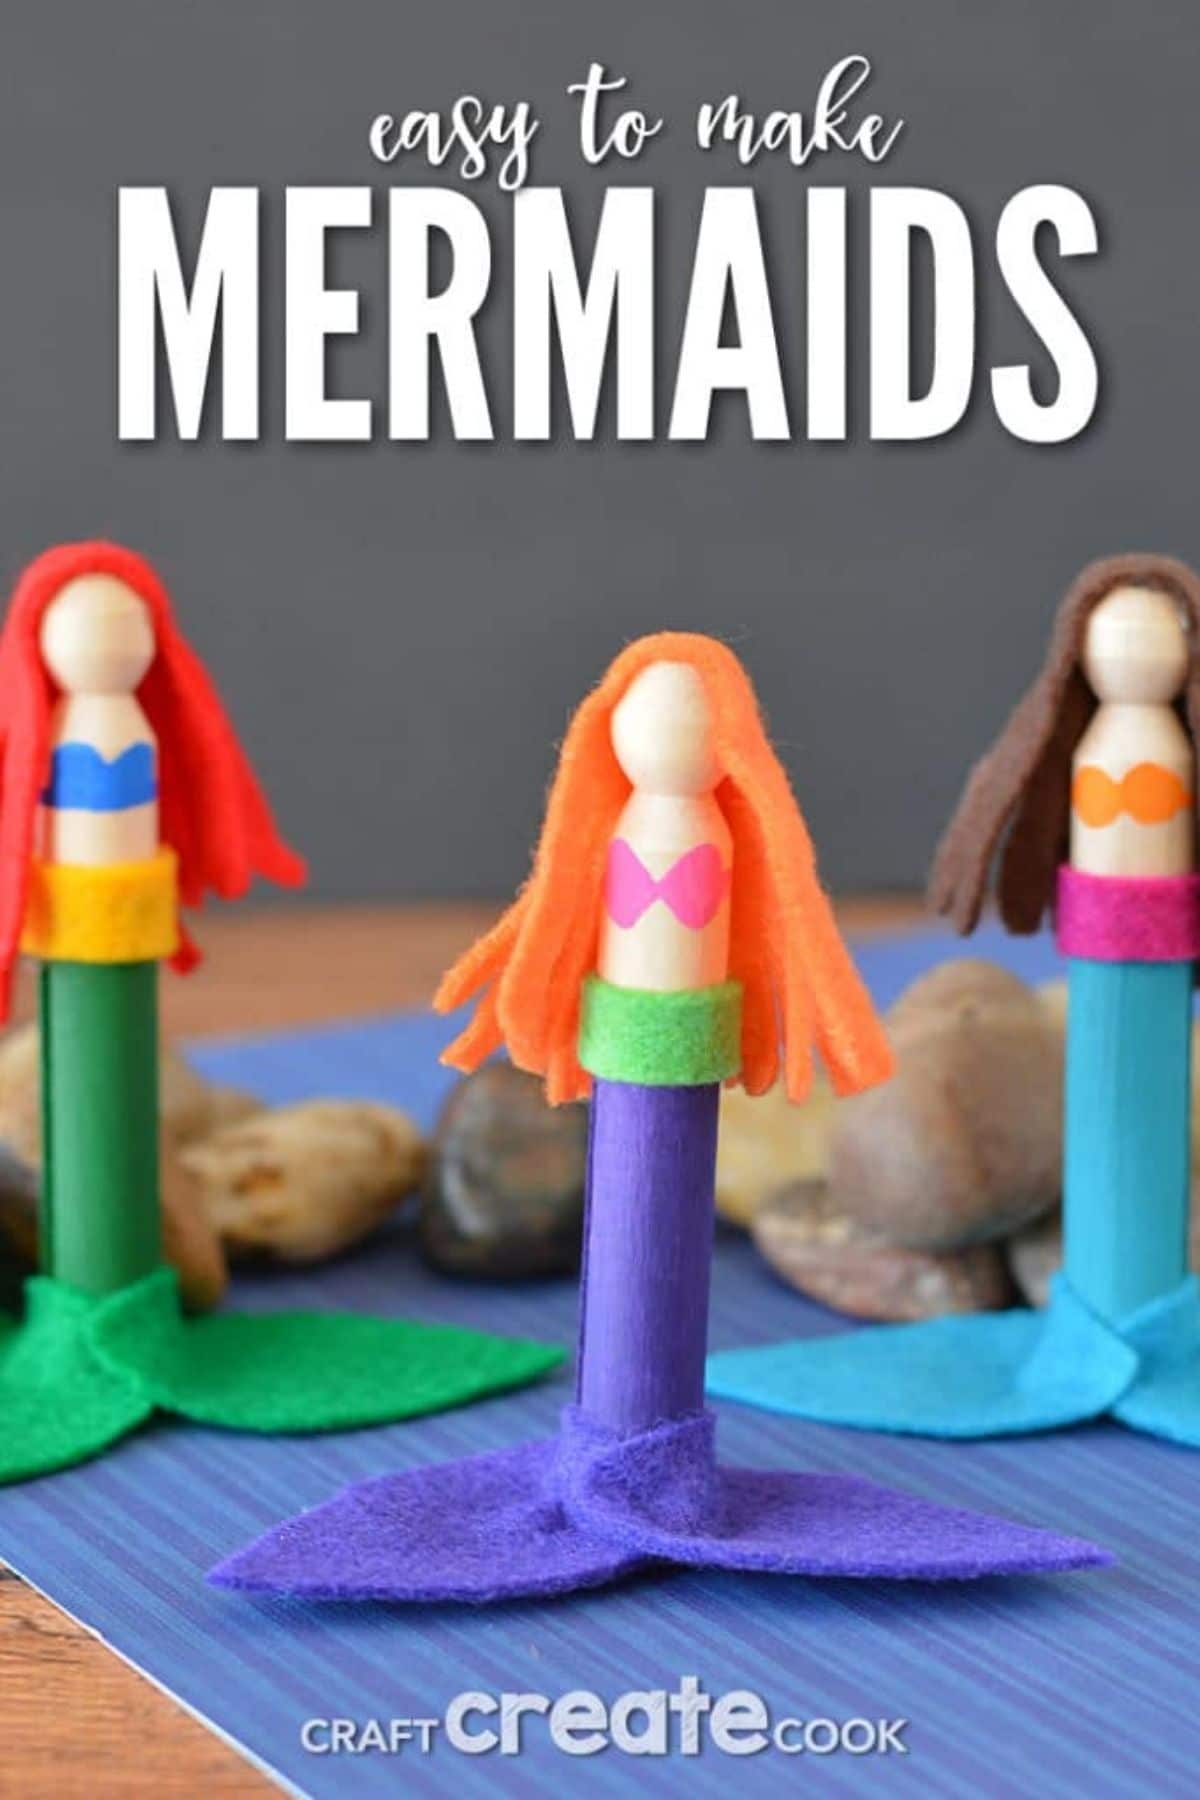 Mermaid pin doll